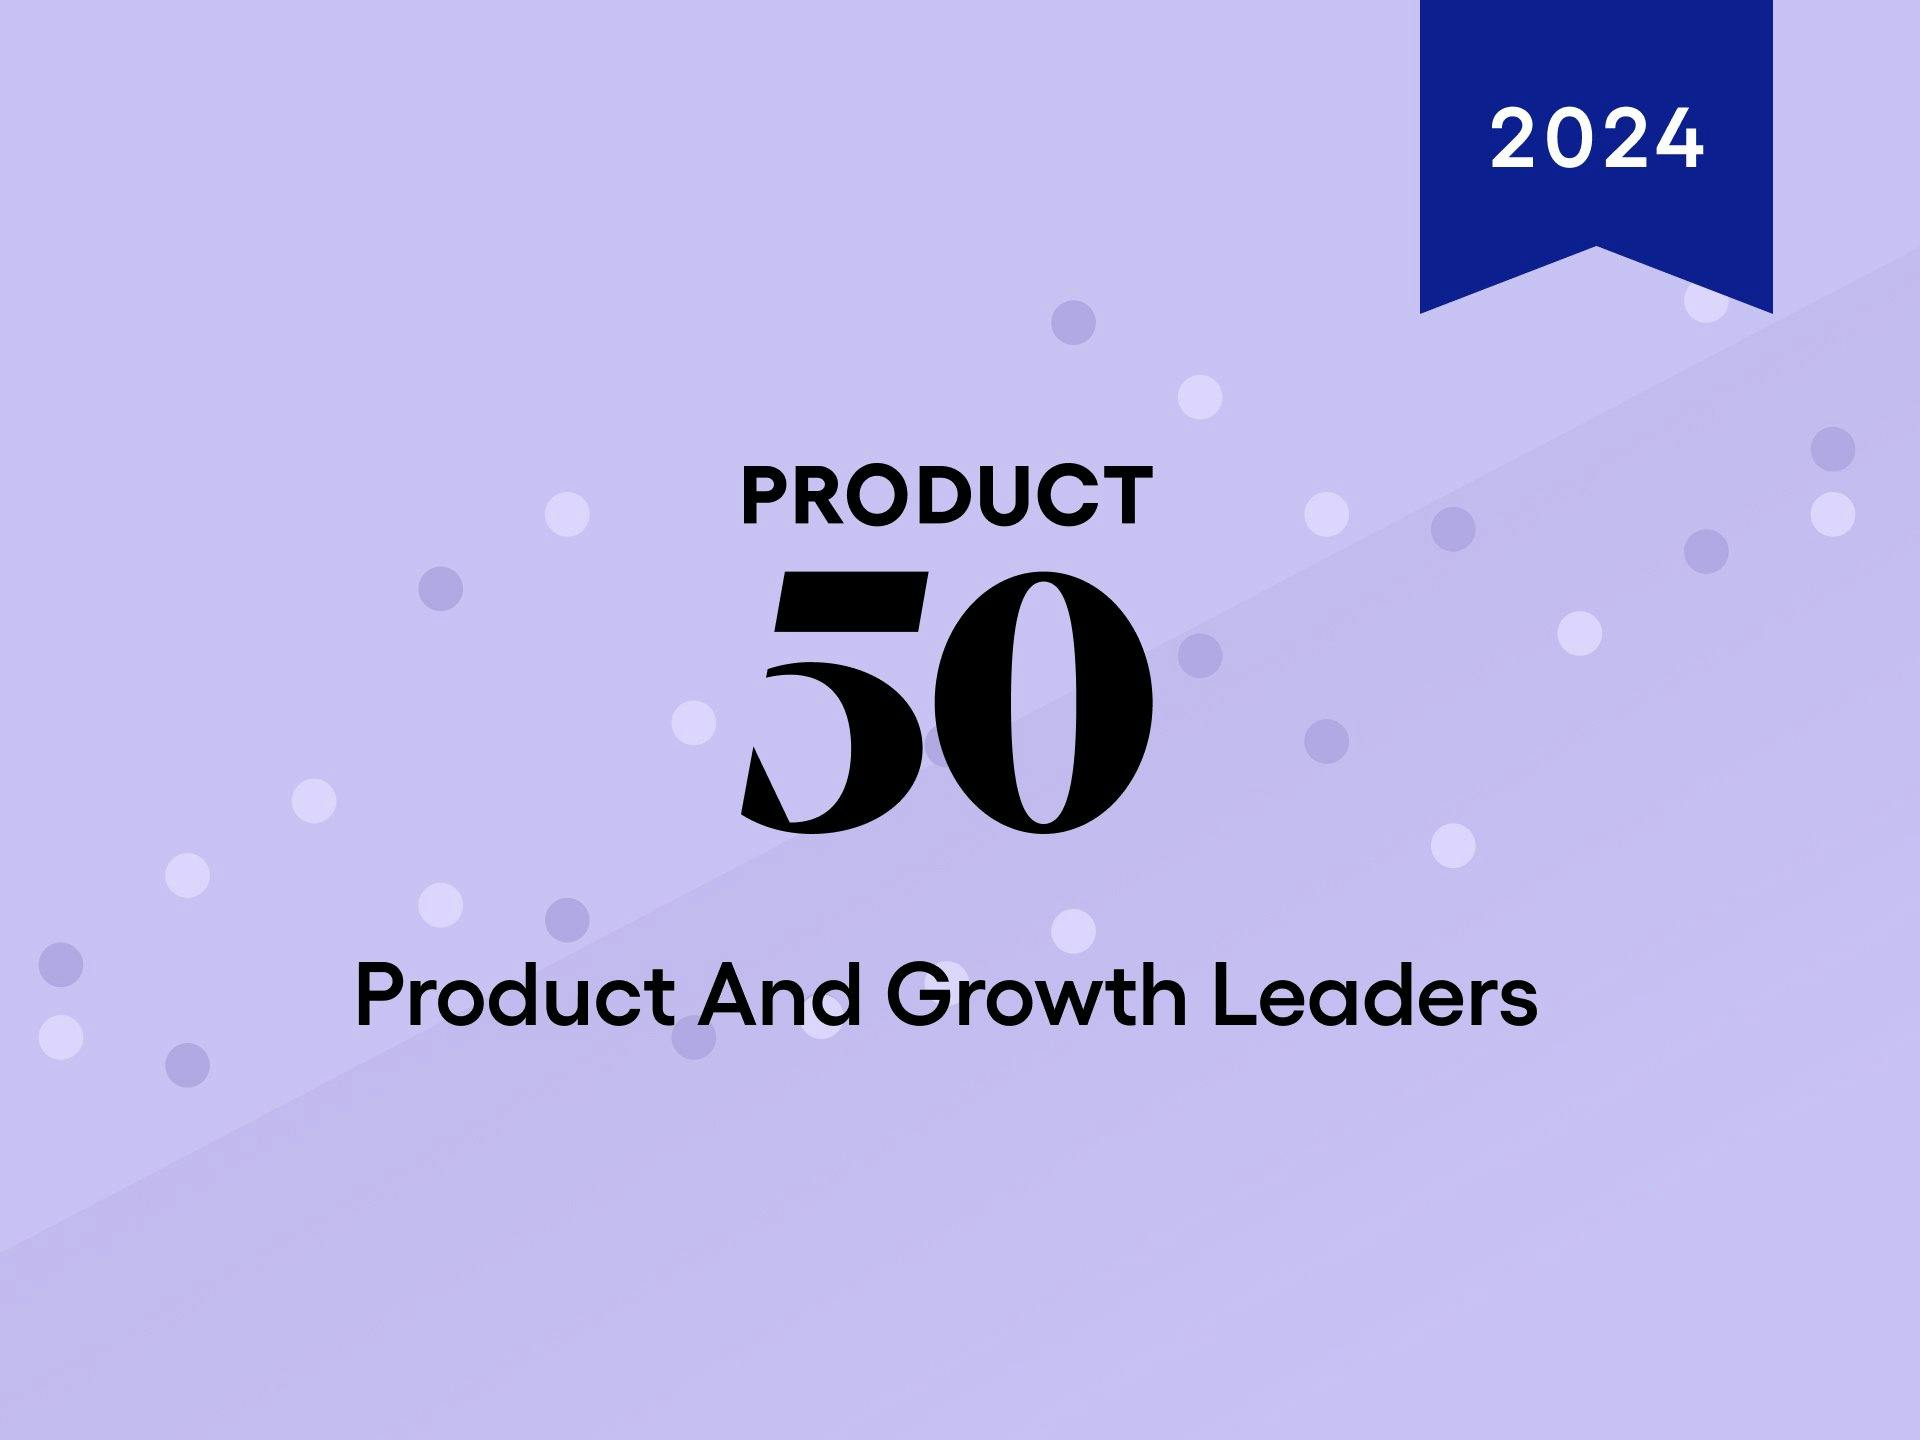 Product 50 2024 Winners